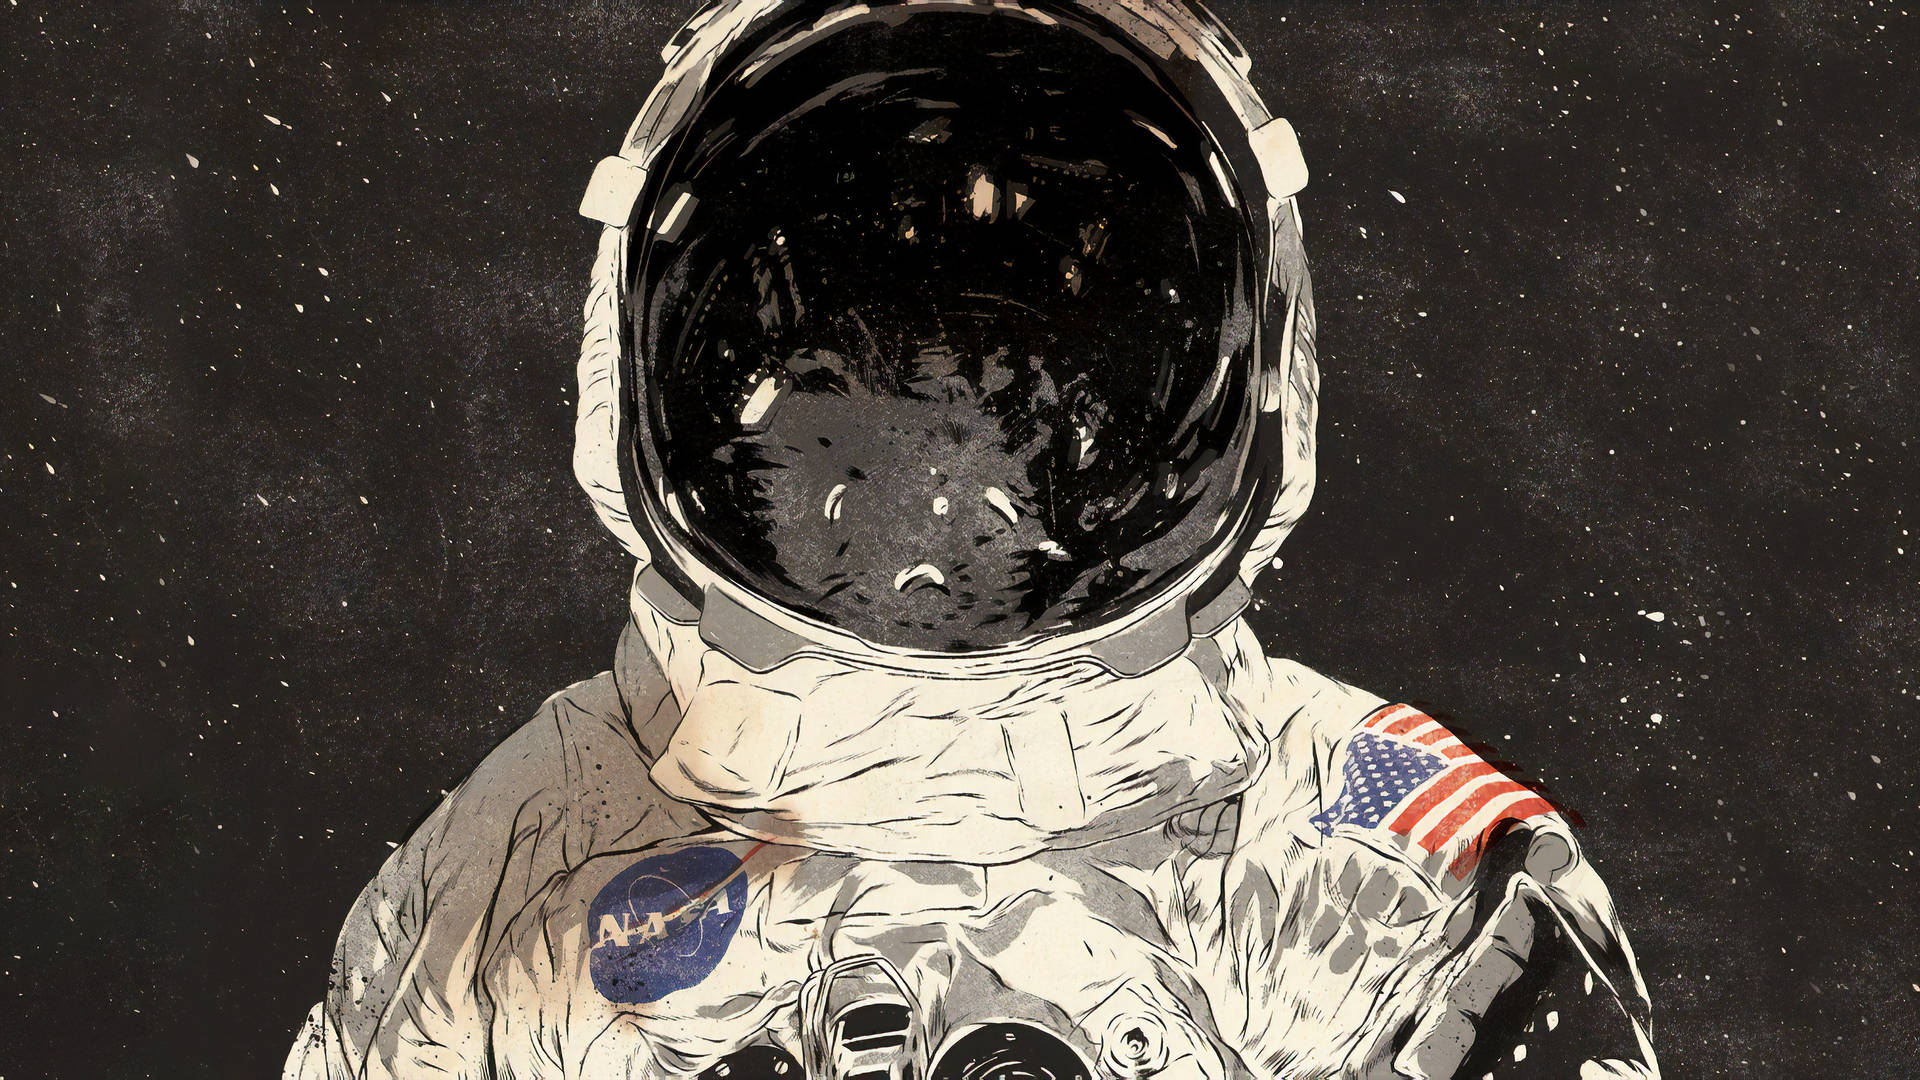 Nasaastronaut Im Weltraum-kunstwerk Wallpaper